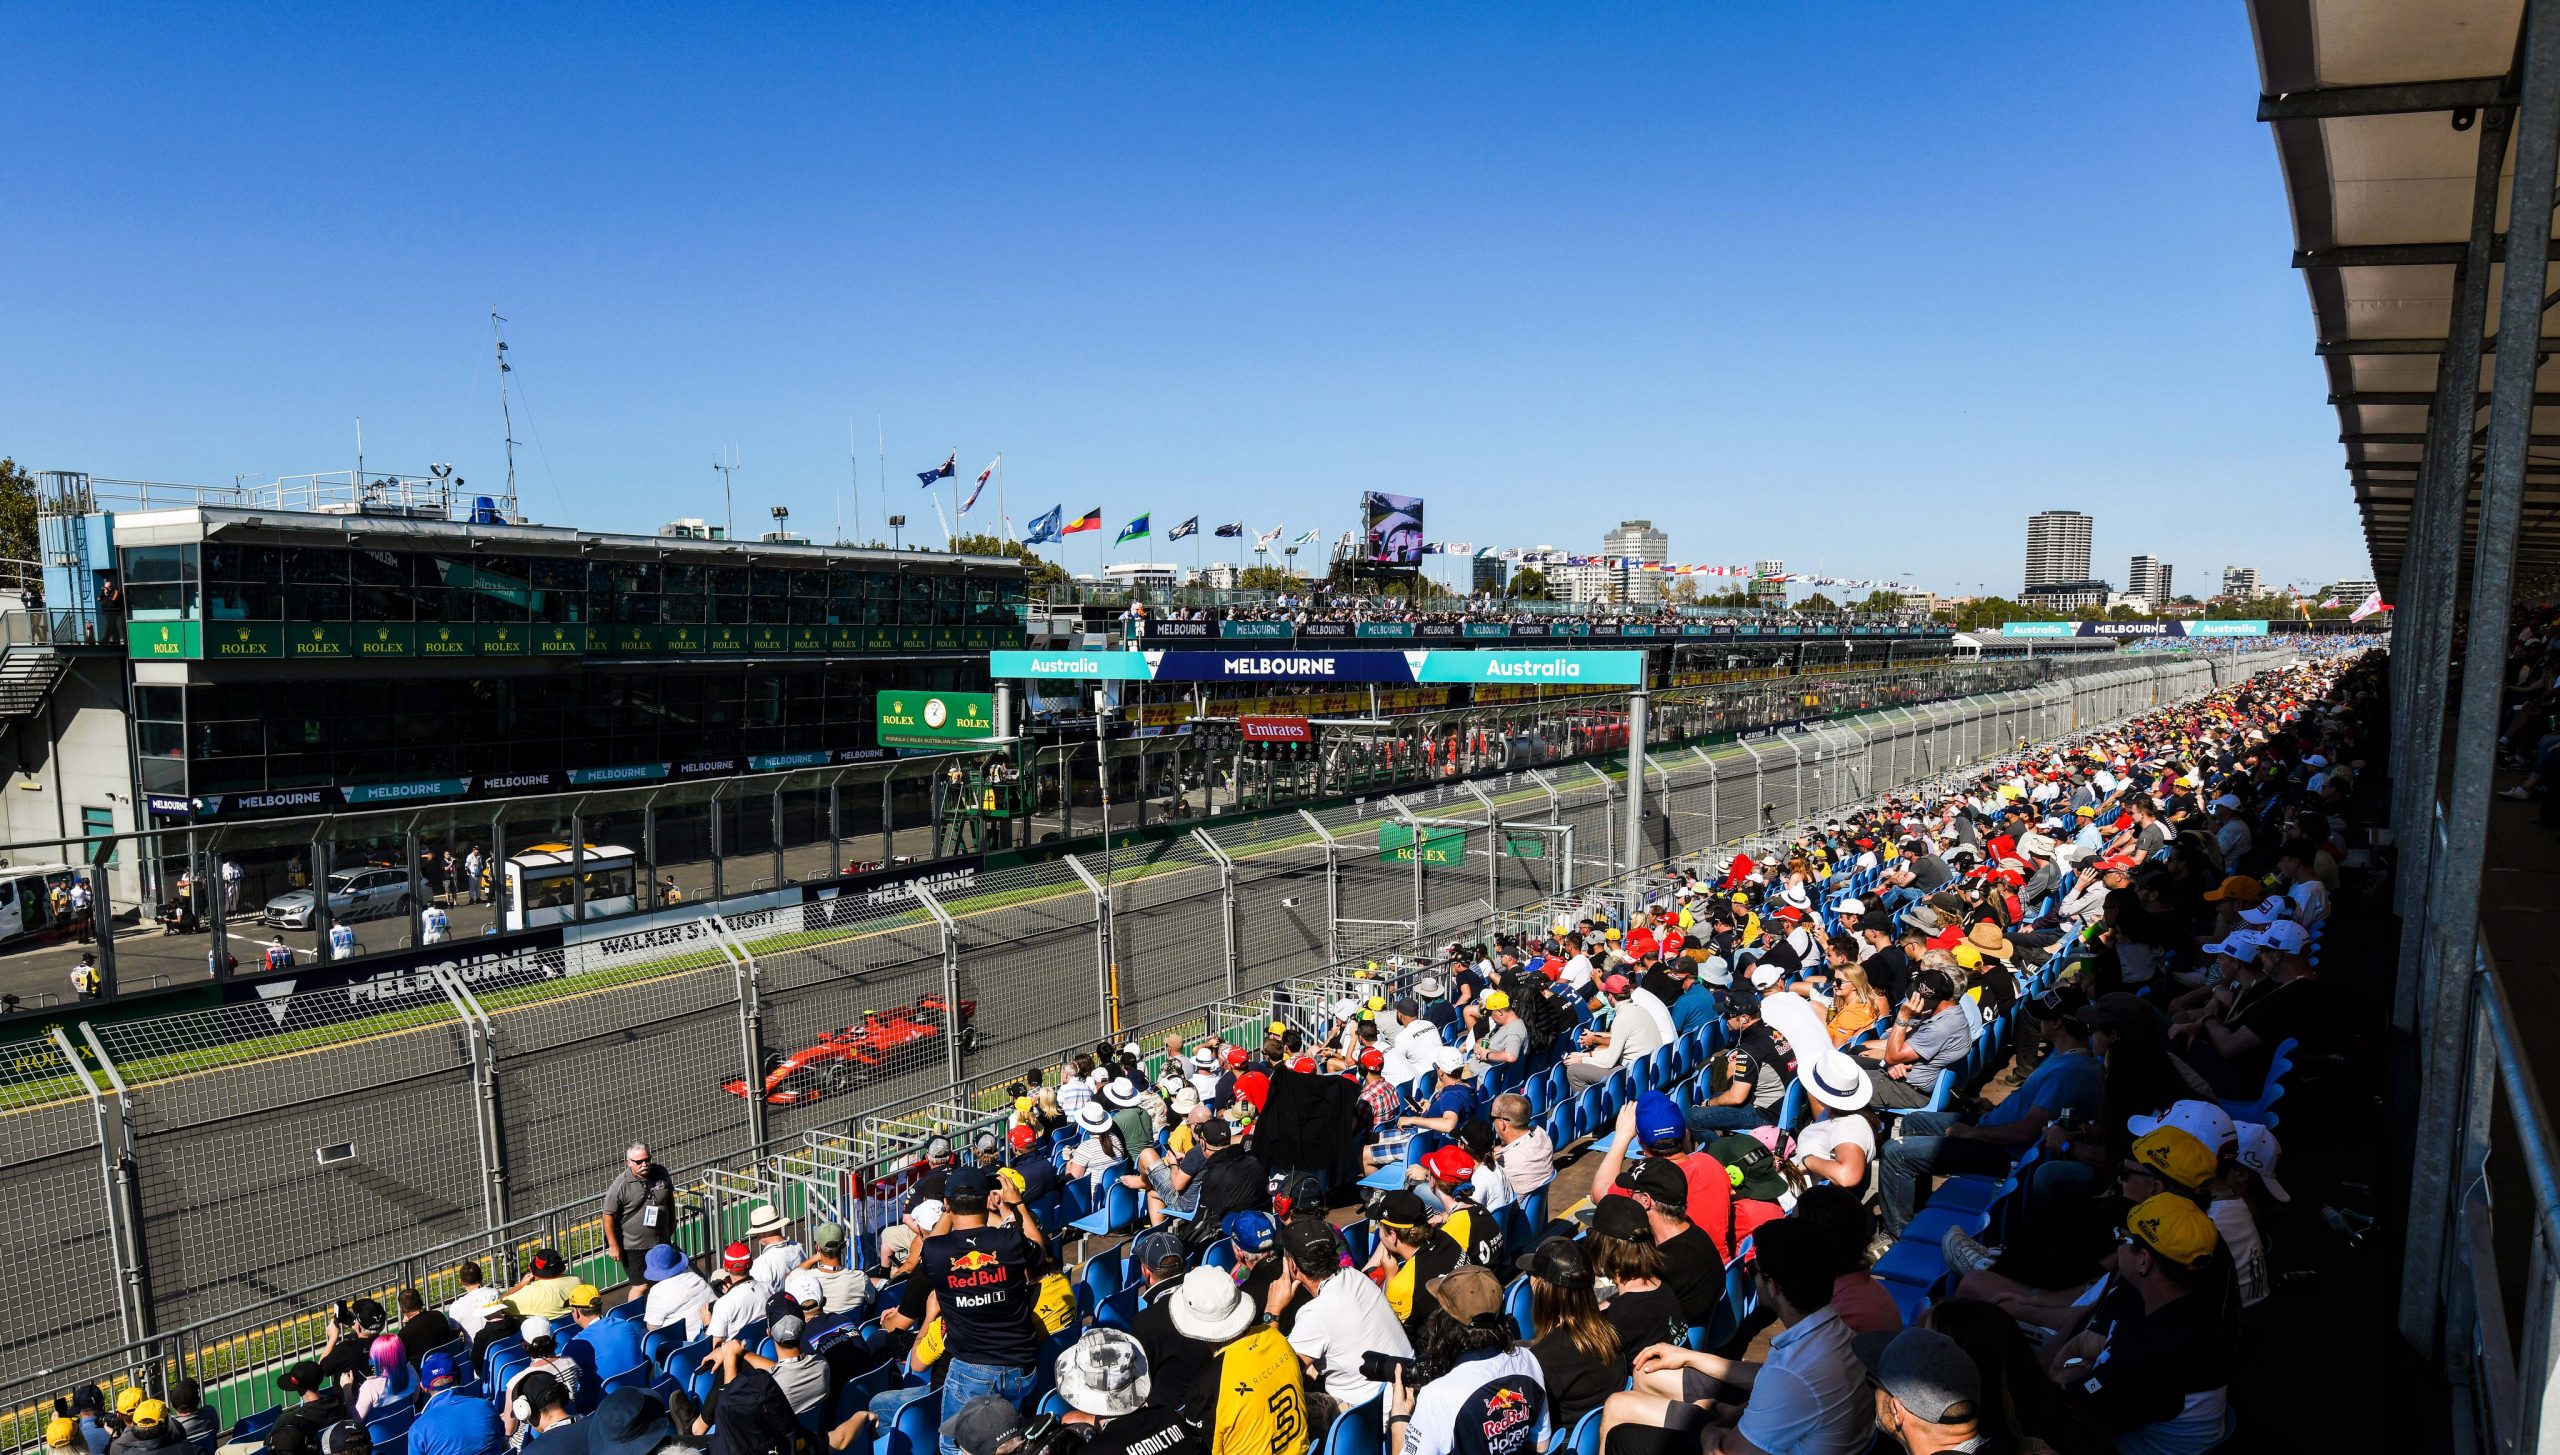 Grand Prix d'Australie